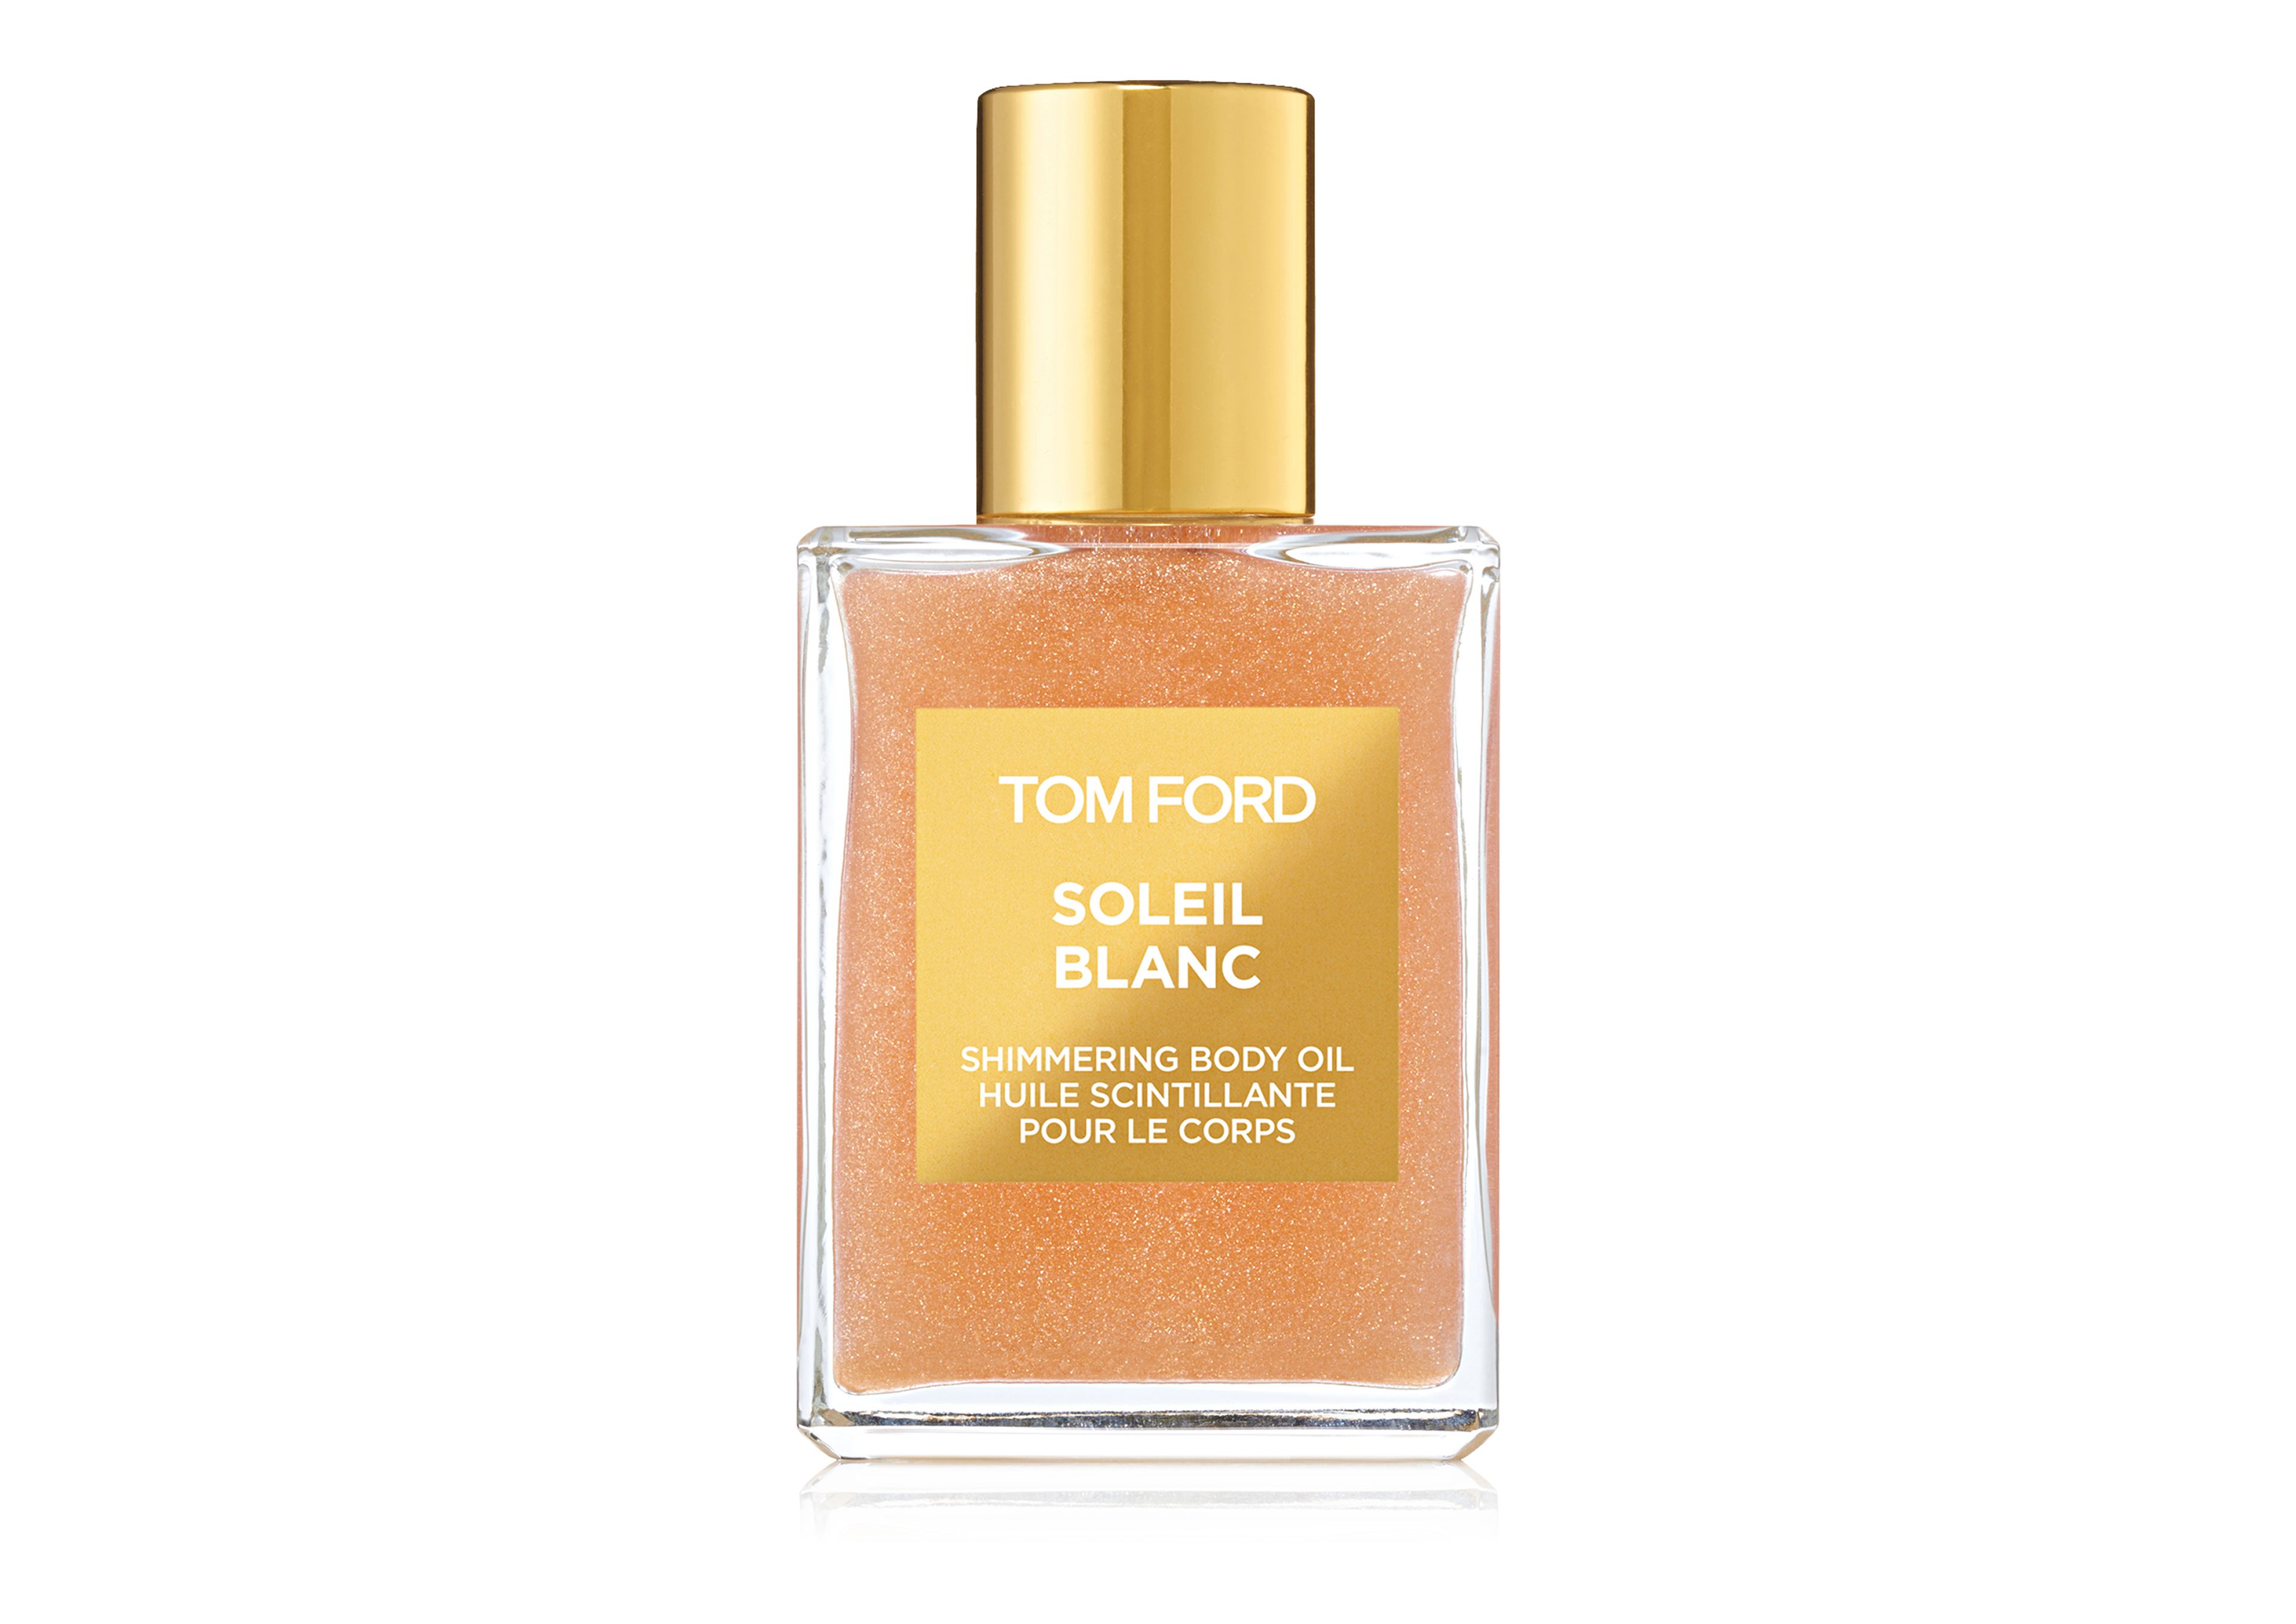 Tom Ford Soleil Blanc Shimmering Body Oil

shade: Rose Gold 1